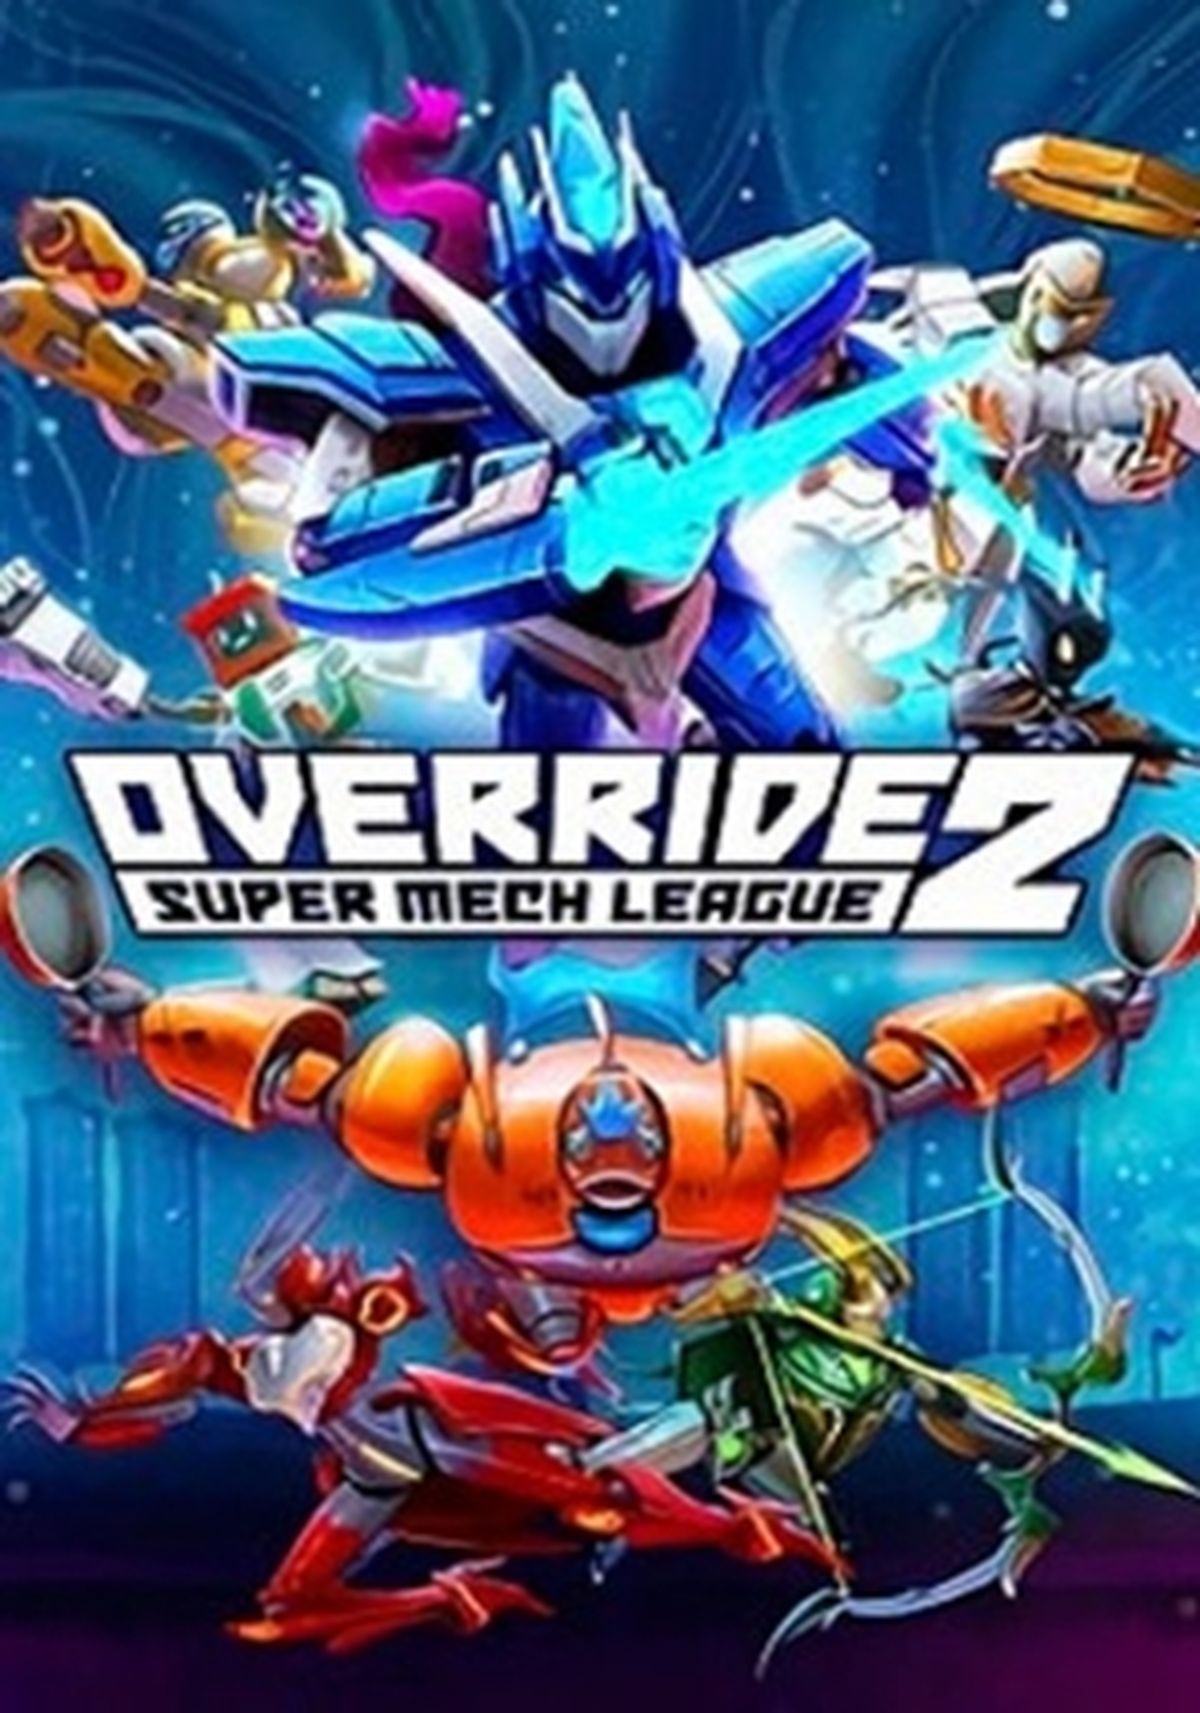 Análise: Override 2: Super Mech League (Switch) tem uma força